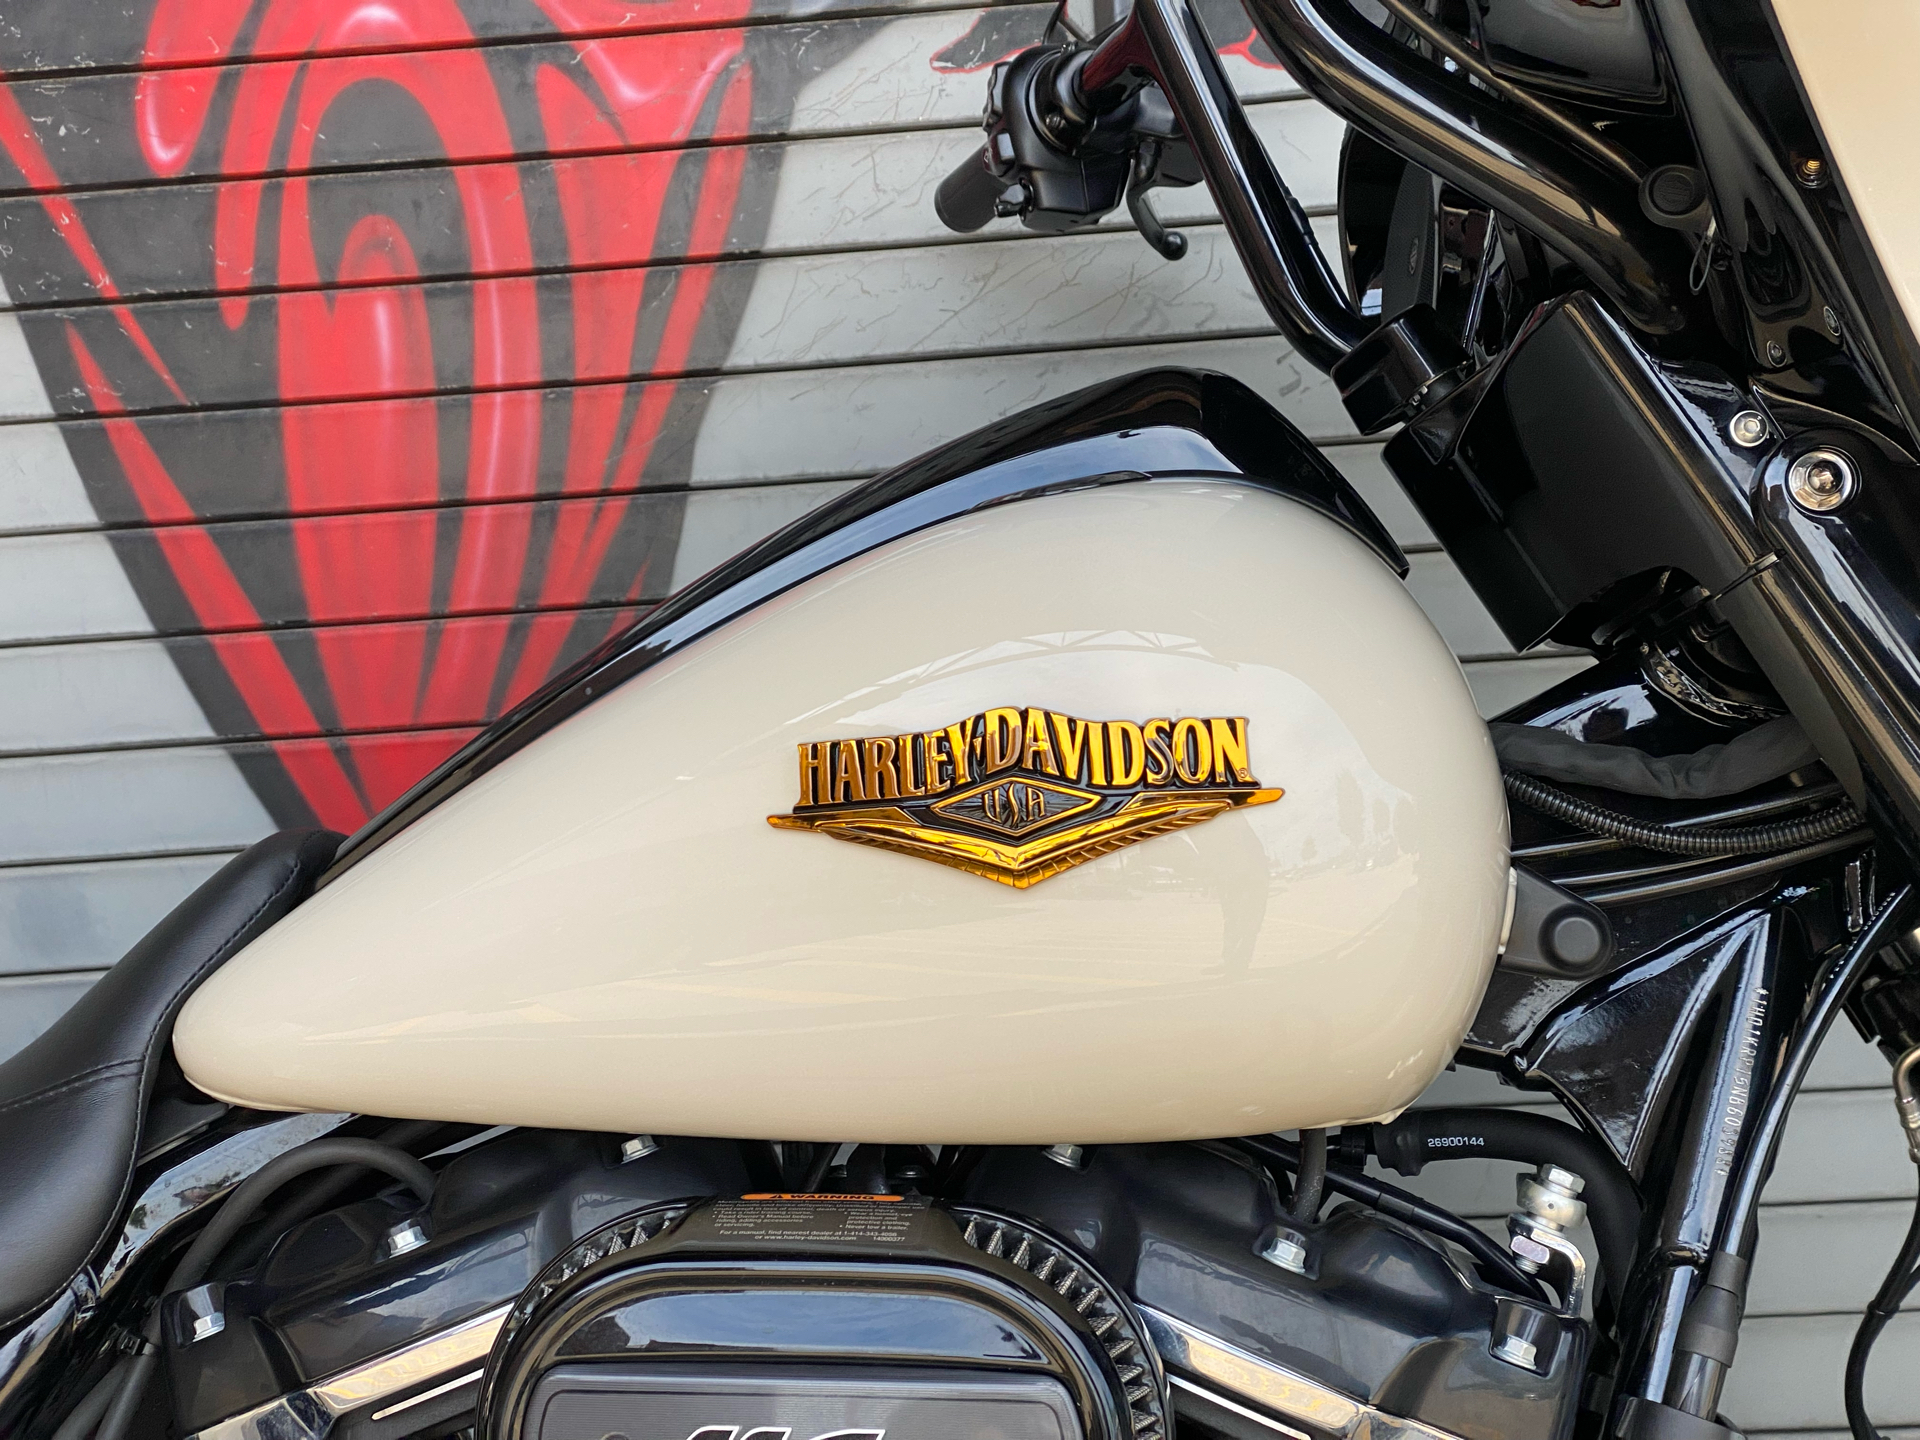 2022 Harley-Davidson Street Glide® Special in Carrollton, Texas - Photo 5